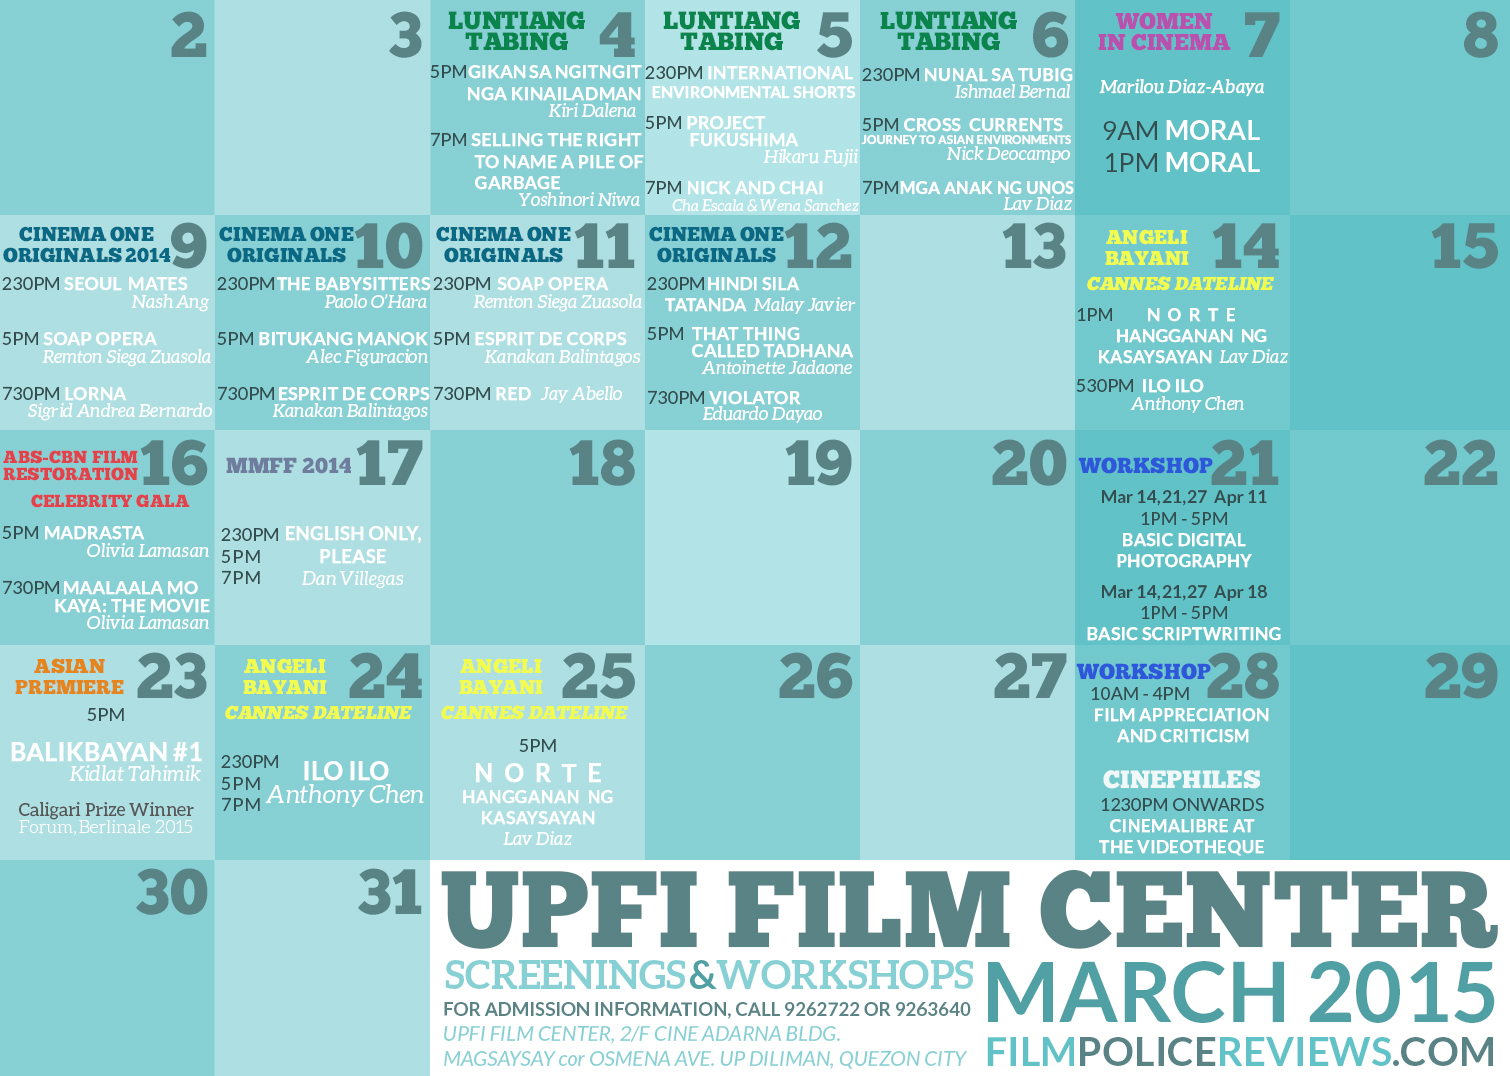 March 2015 Screenings and Workshops at UPFI Film Institute